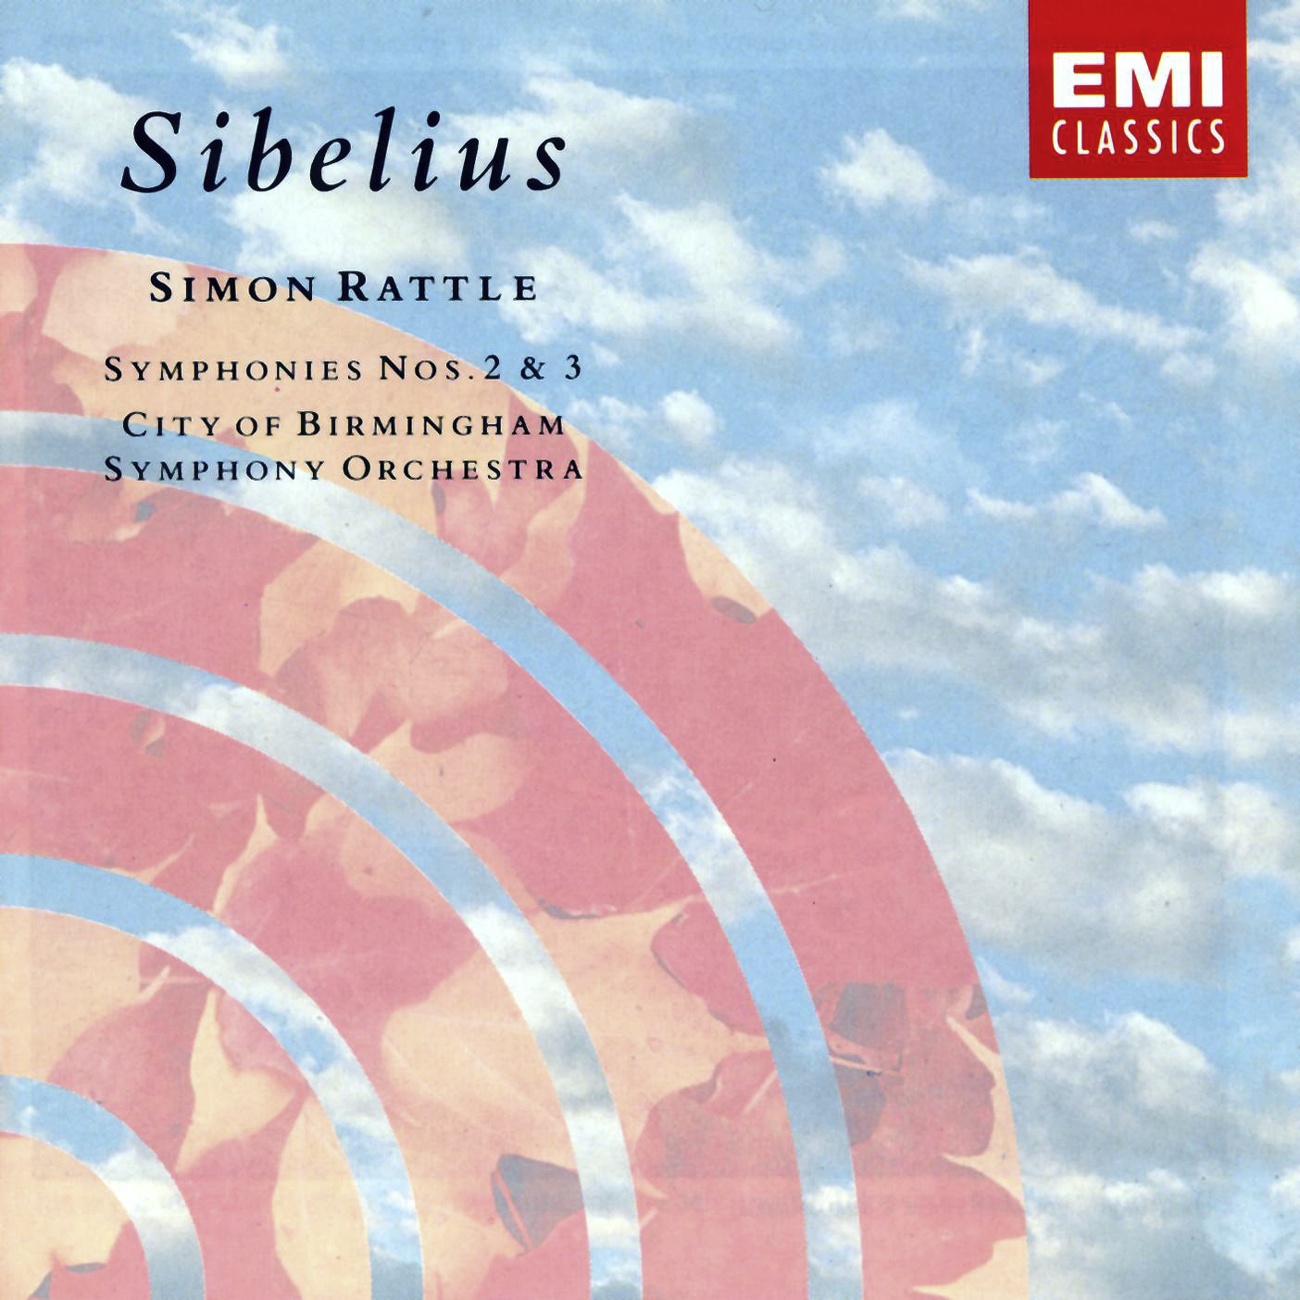 Sibelius: Symphony No. 2 in D, Op. 43: IV. Finale (Allegro moderato)